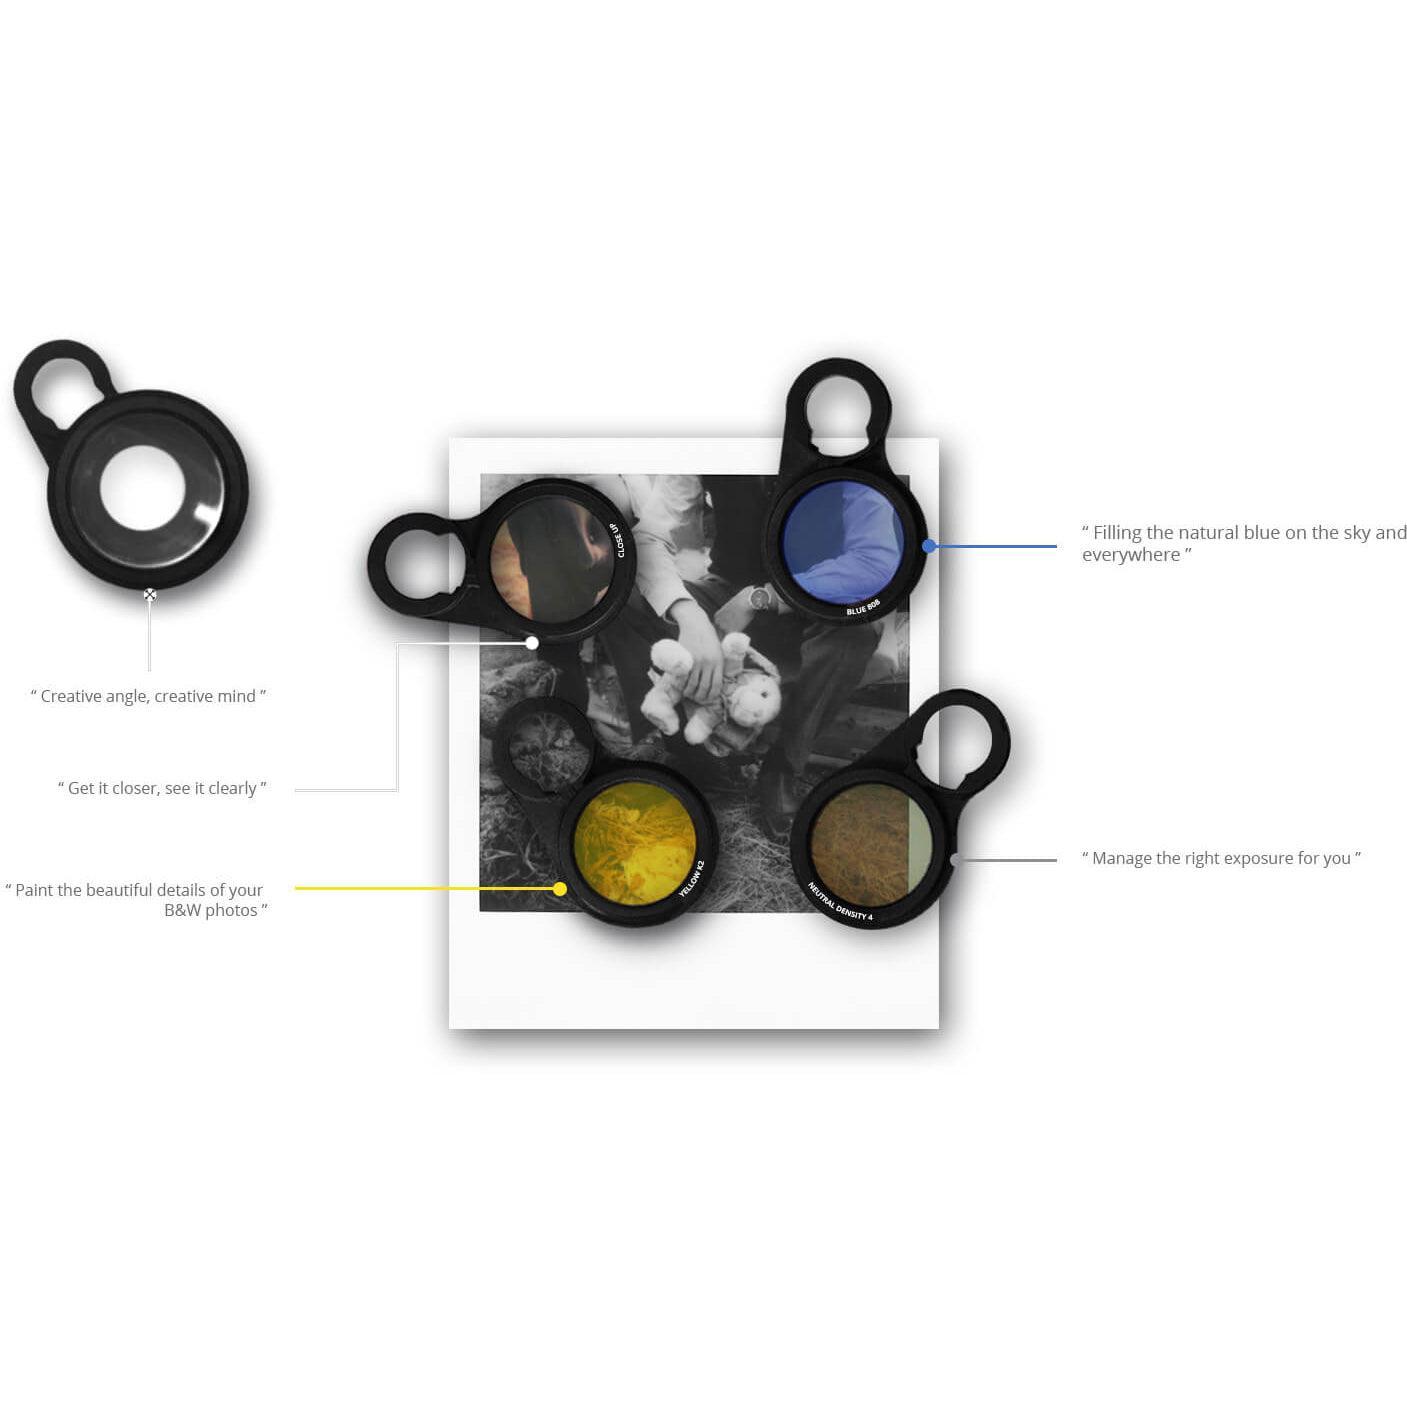 MiNT Lens Set for Polaroid SX-70 Cameras - 8storeytree